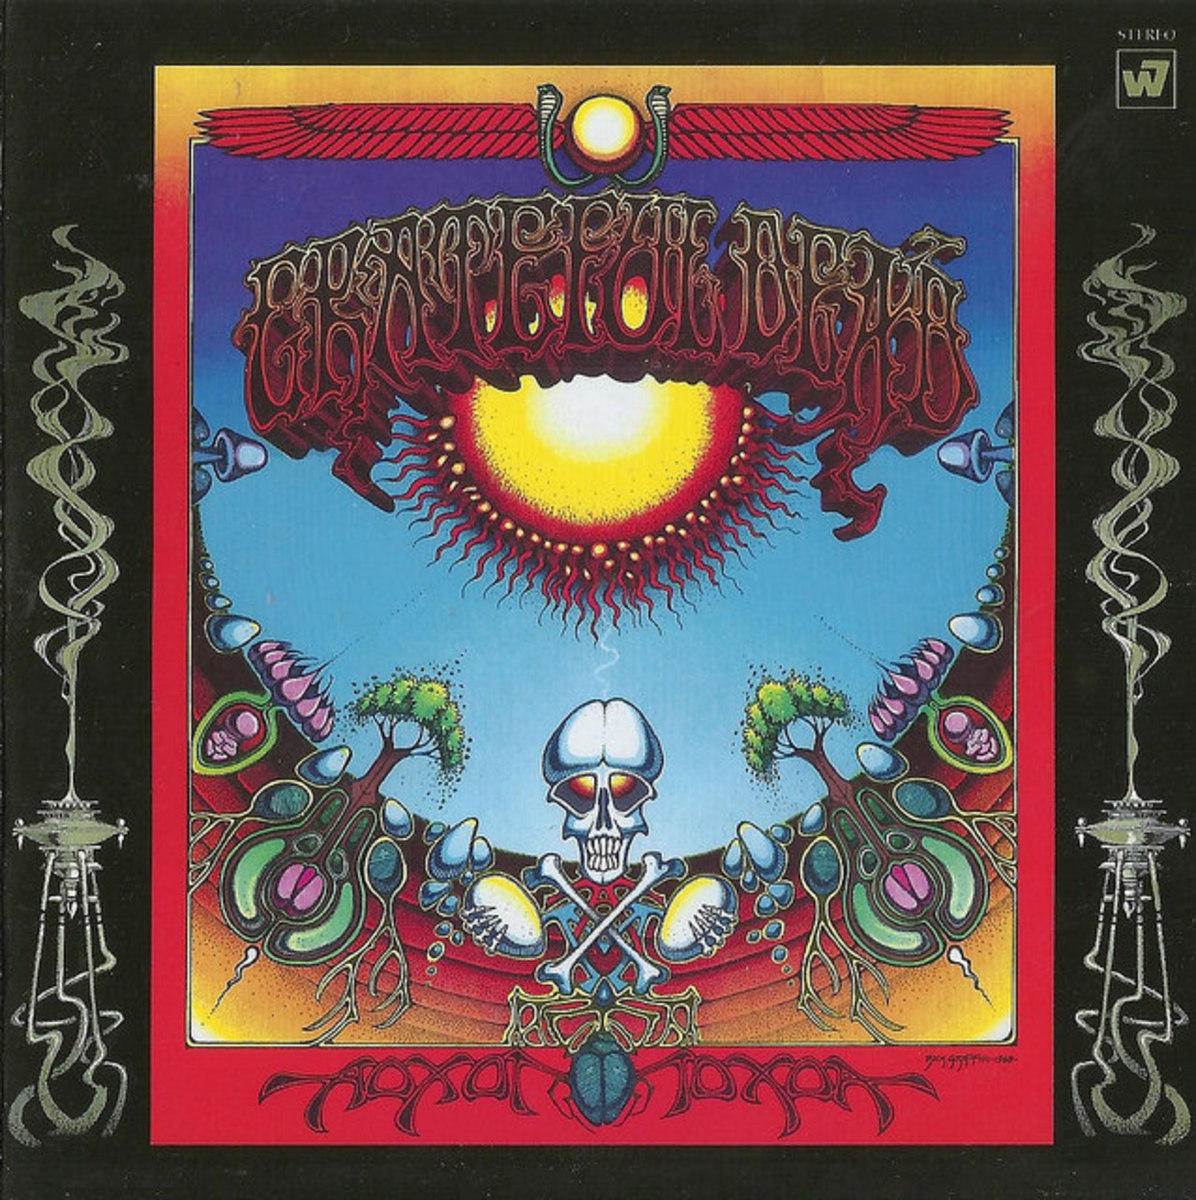 Grateful Dead "Aoxomoxoa" Warner Bros. Seven Arts Records WS 1790 12" LP Vinyl Record, US Pressing (1969) Album Cover Art by Rick Griffin